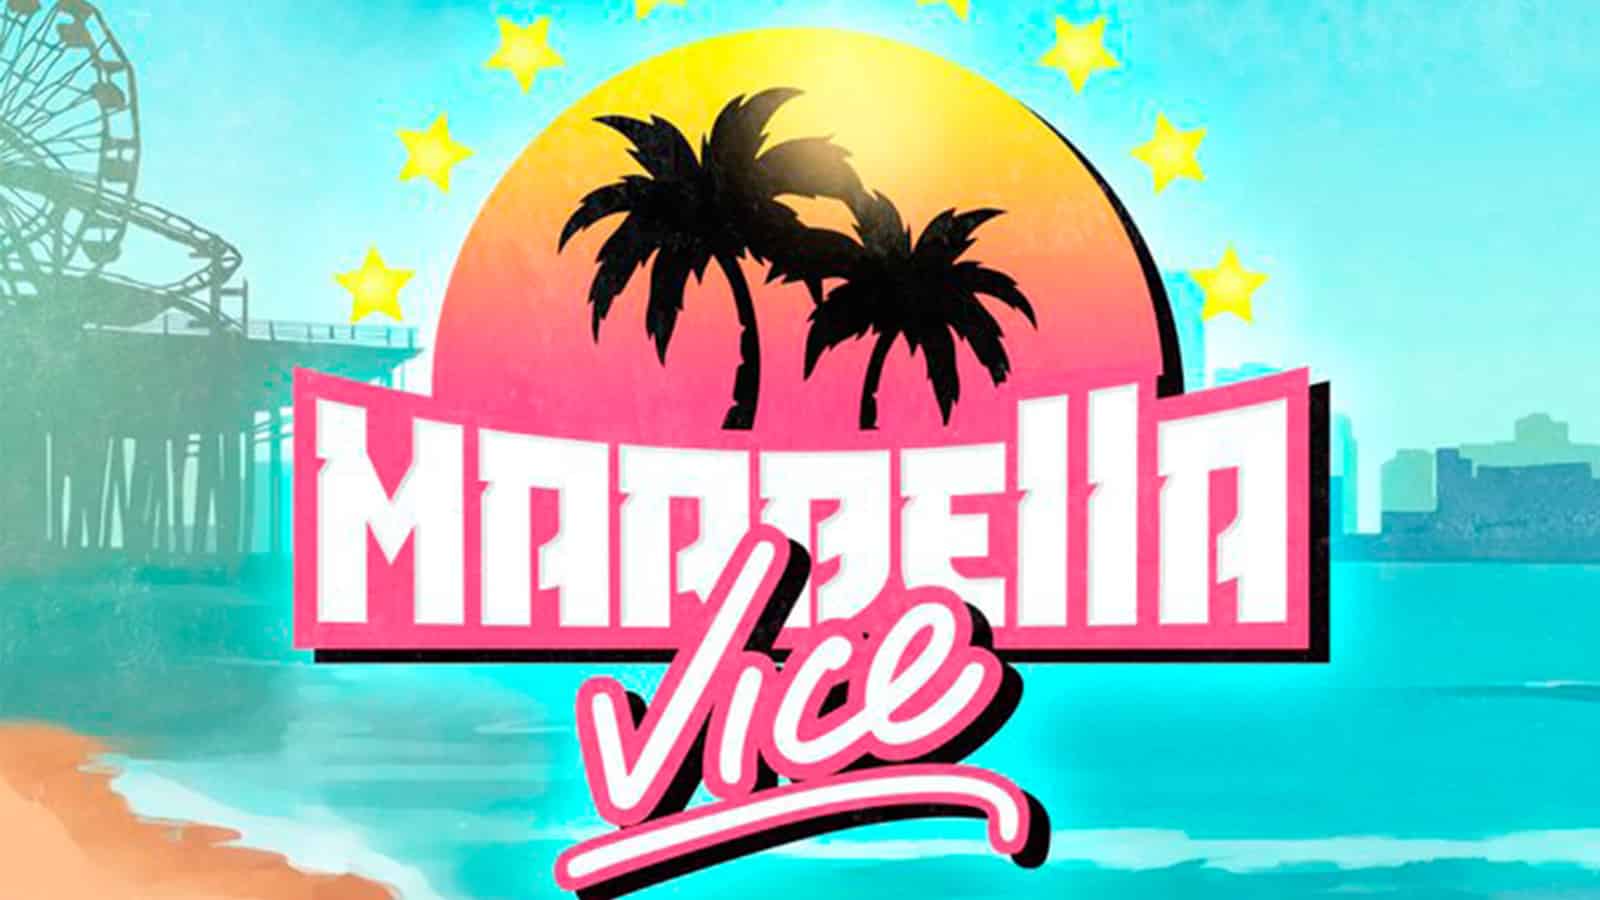 Logo servidor GTA Roleplay Marbella Vice